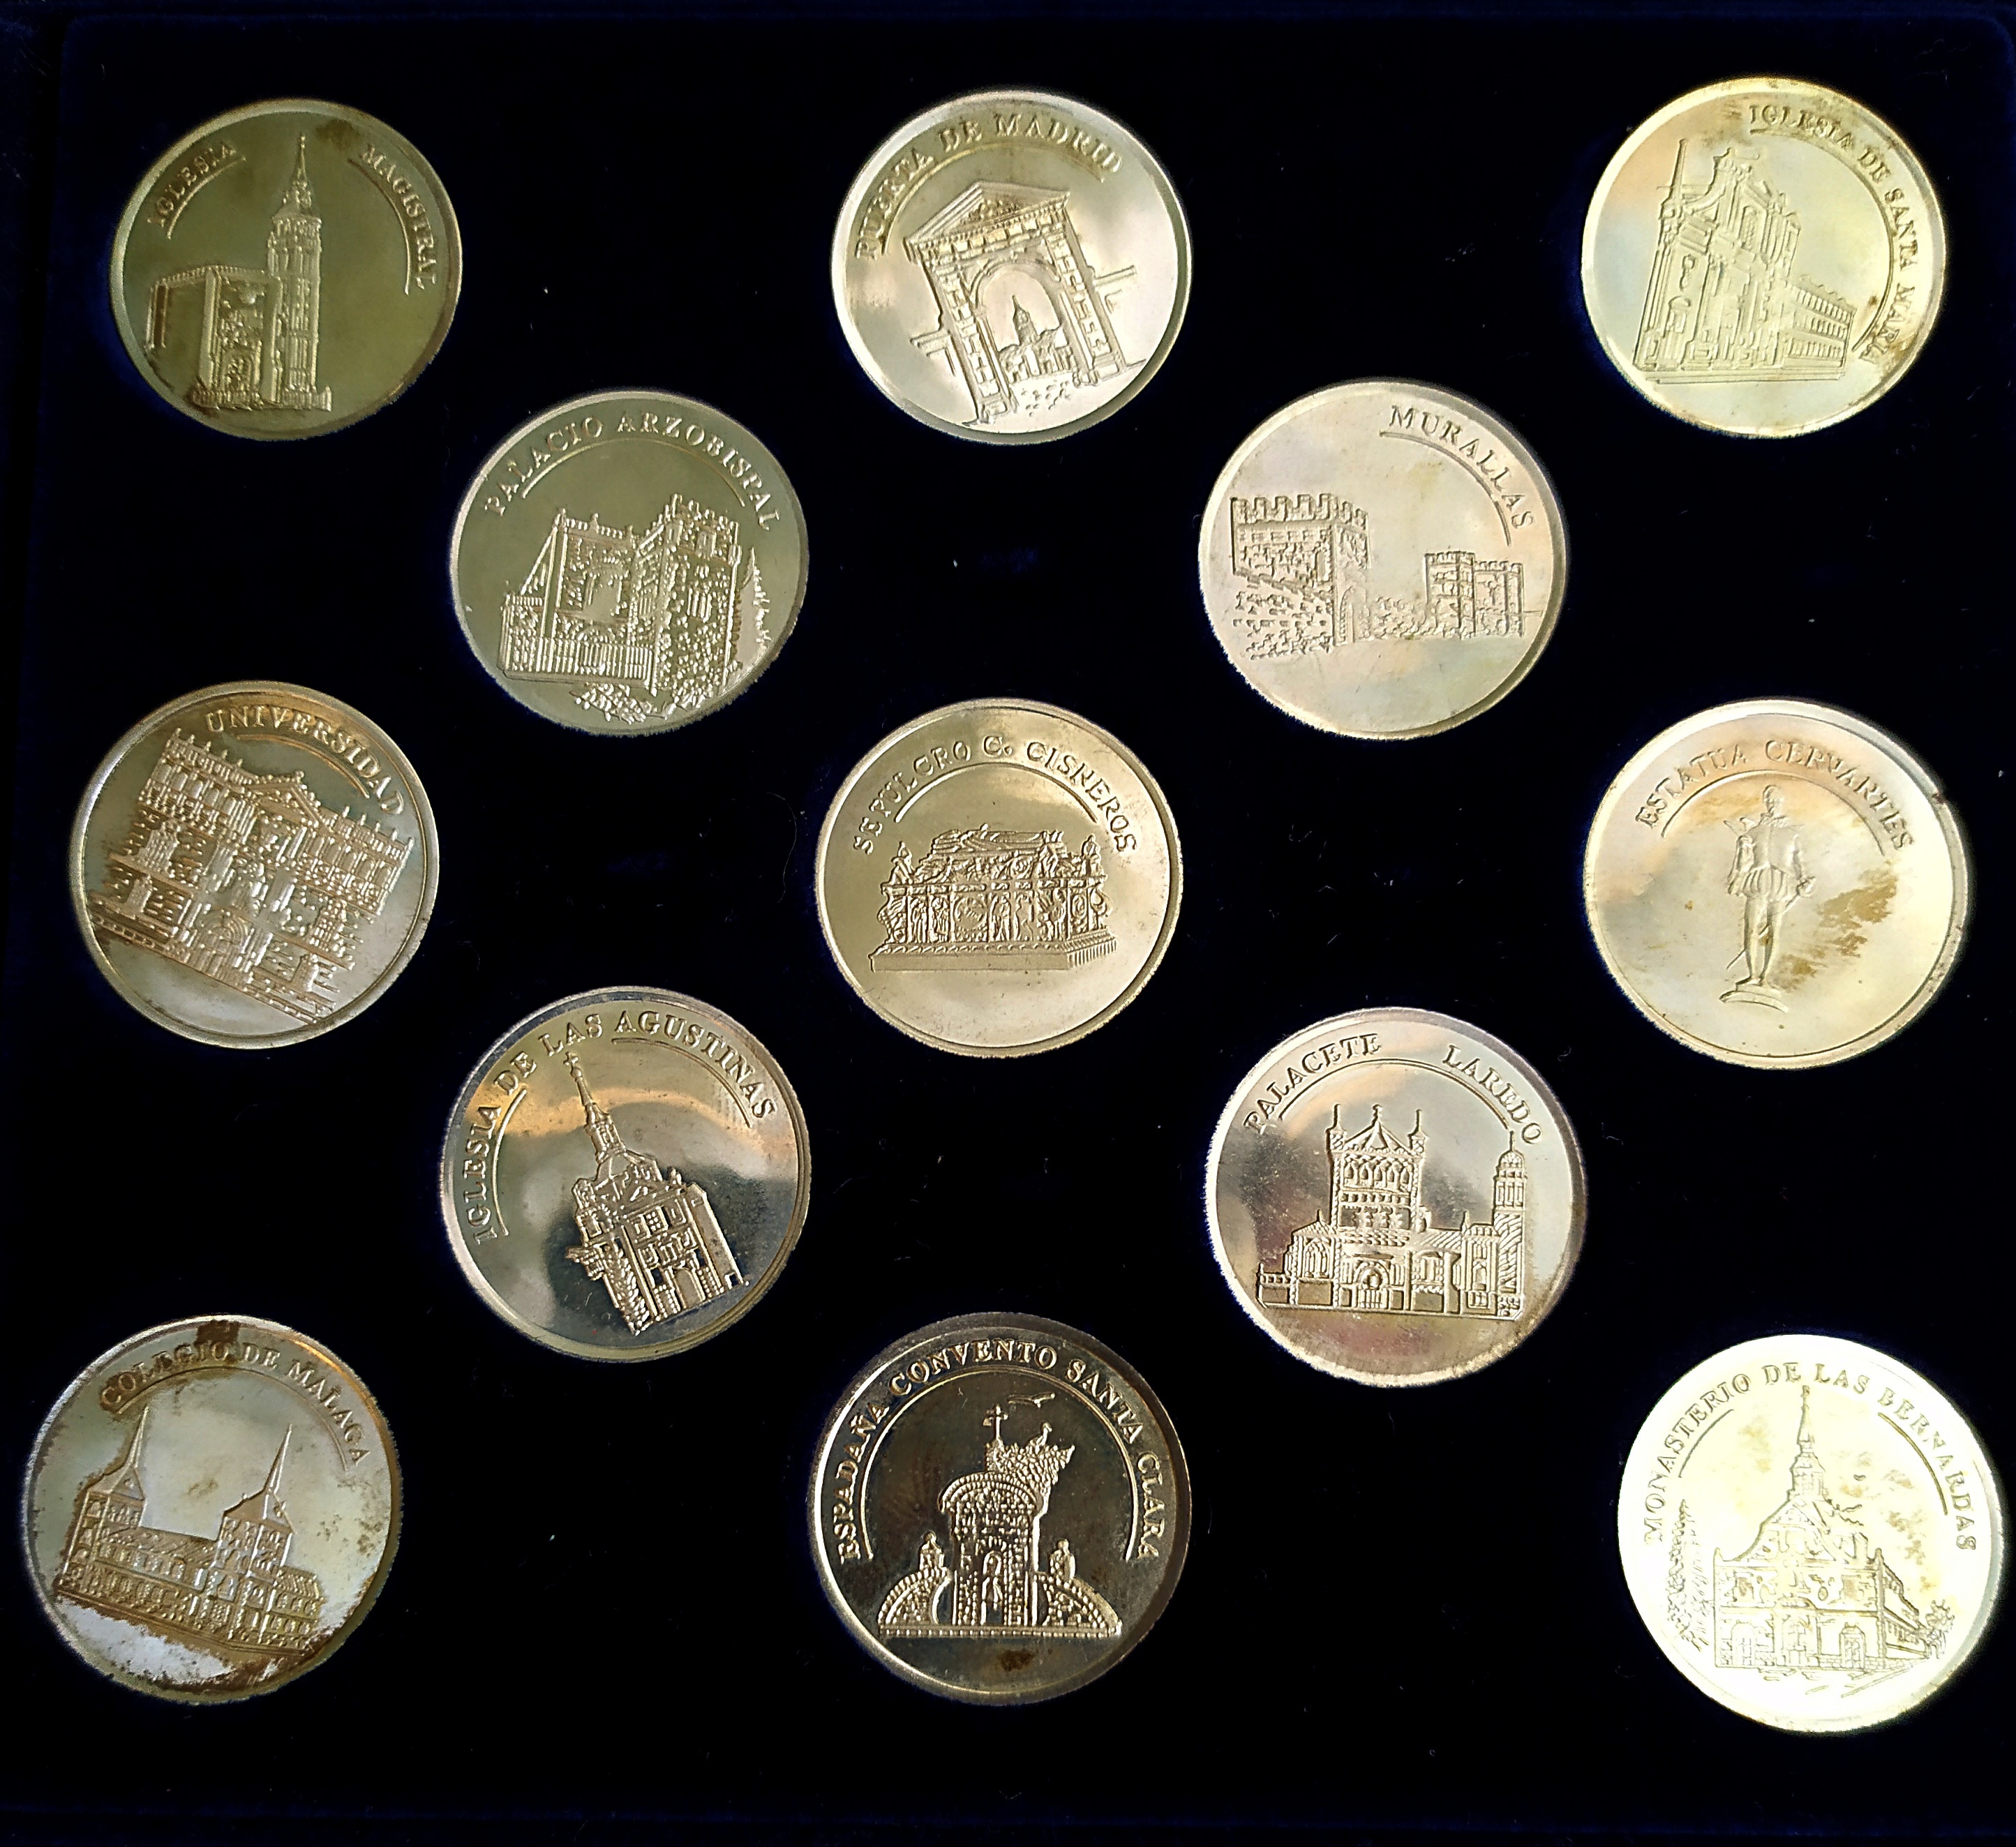 Colección de monedas de Alcalá de Henares